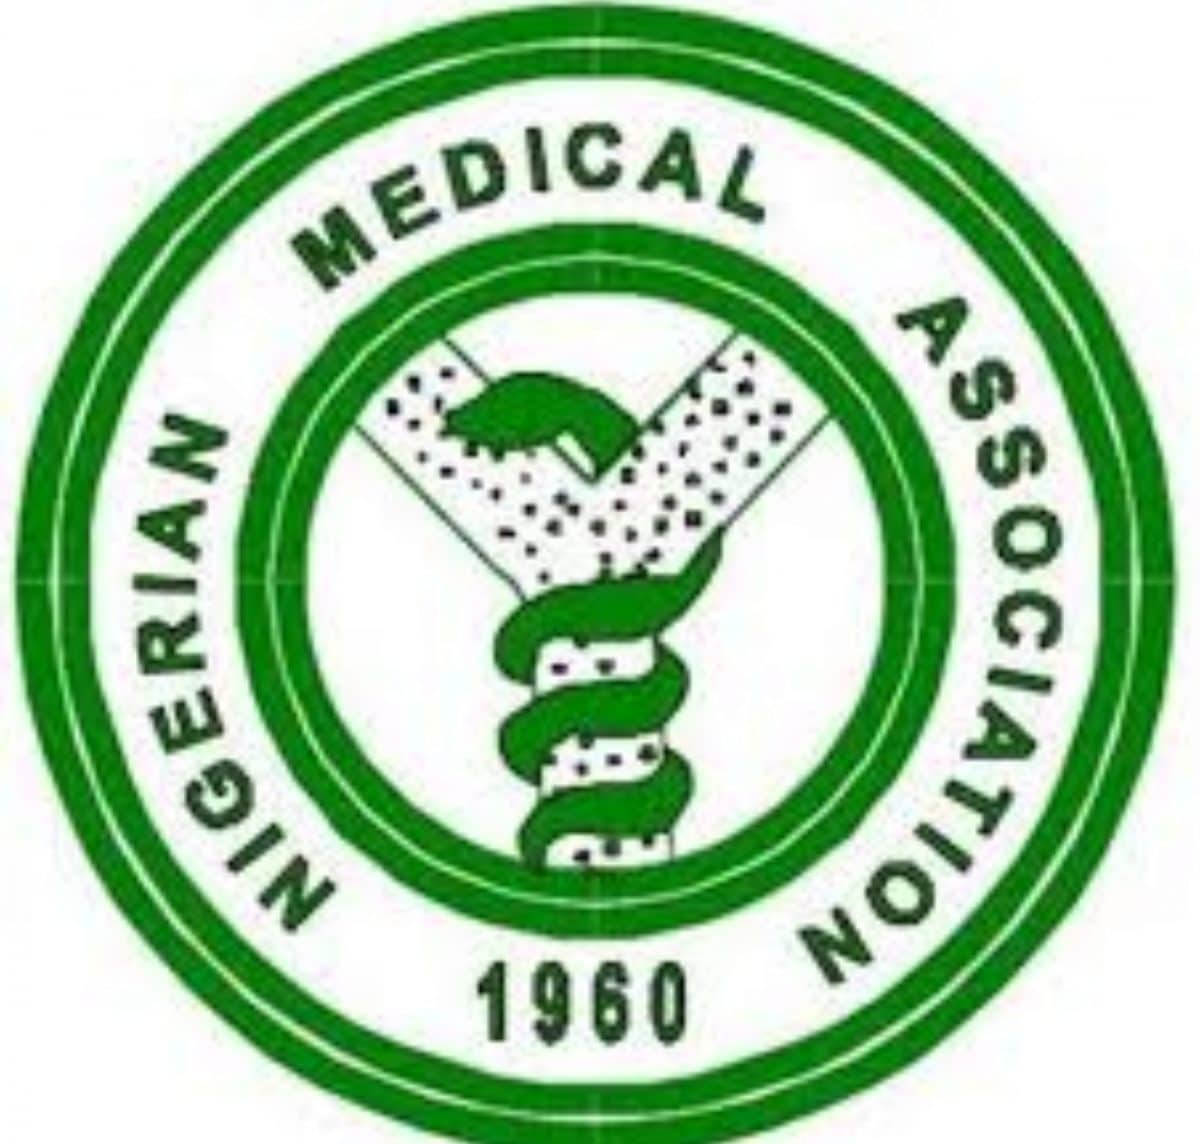 Nigeria news : Protest greets Enugu NMA election, doctors demand cancellation